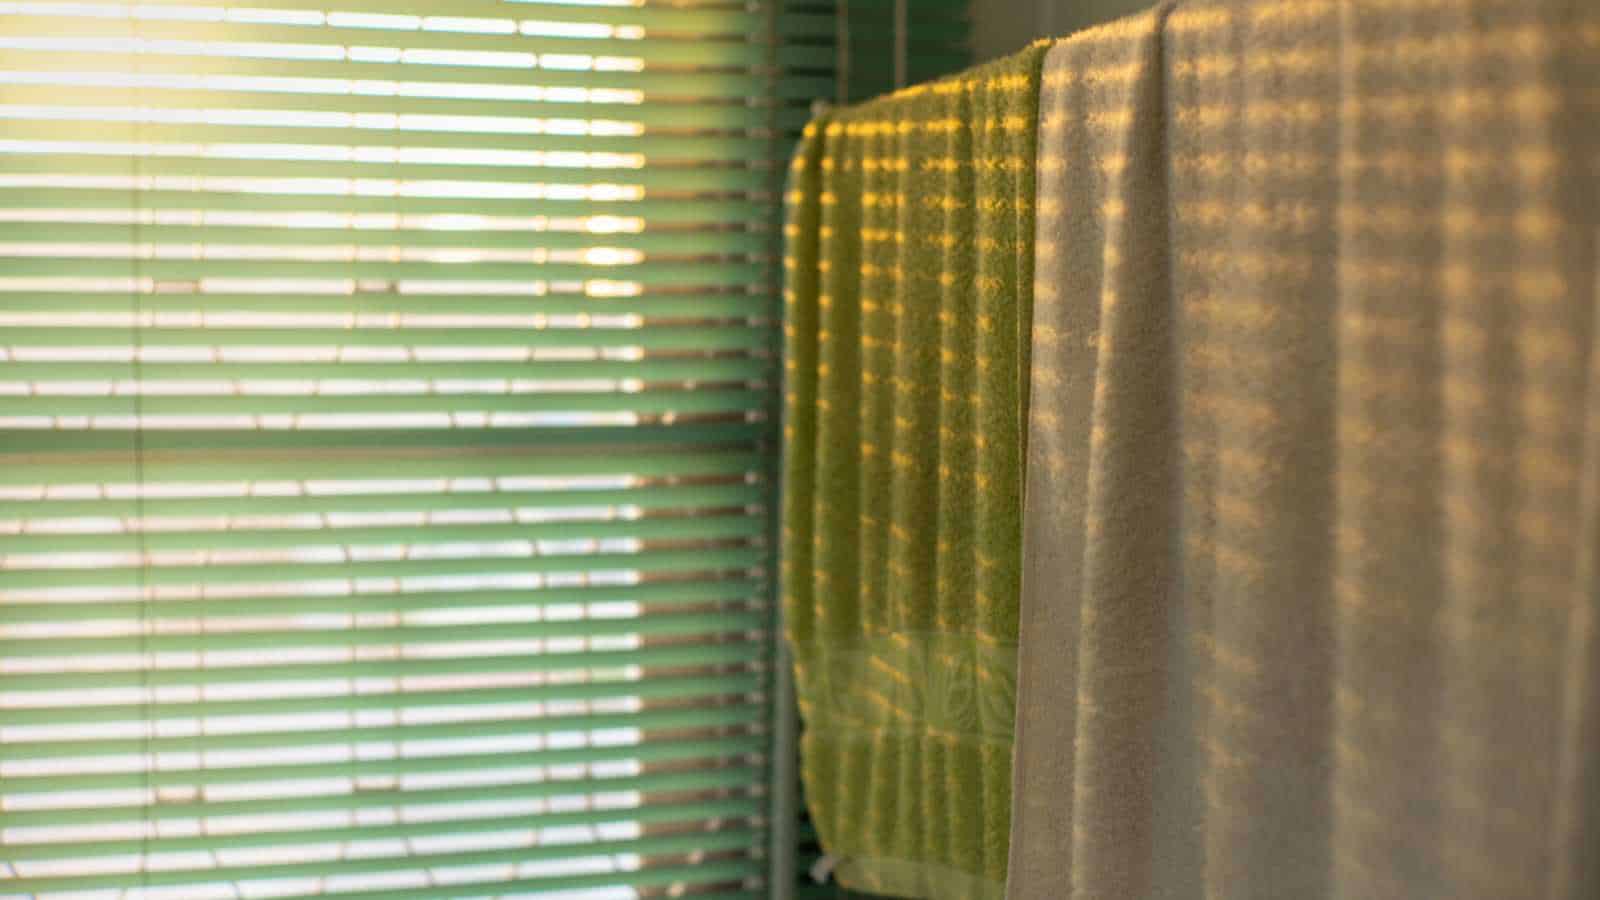 Hanging wet towels on window